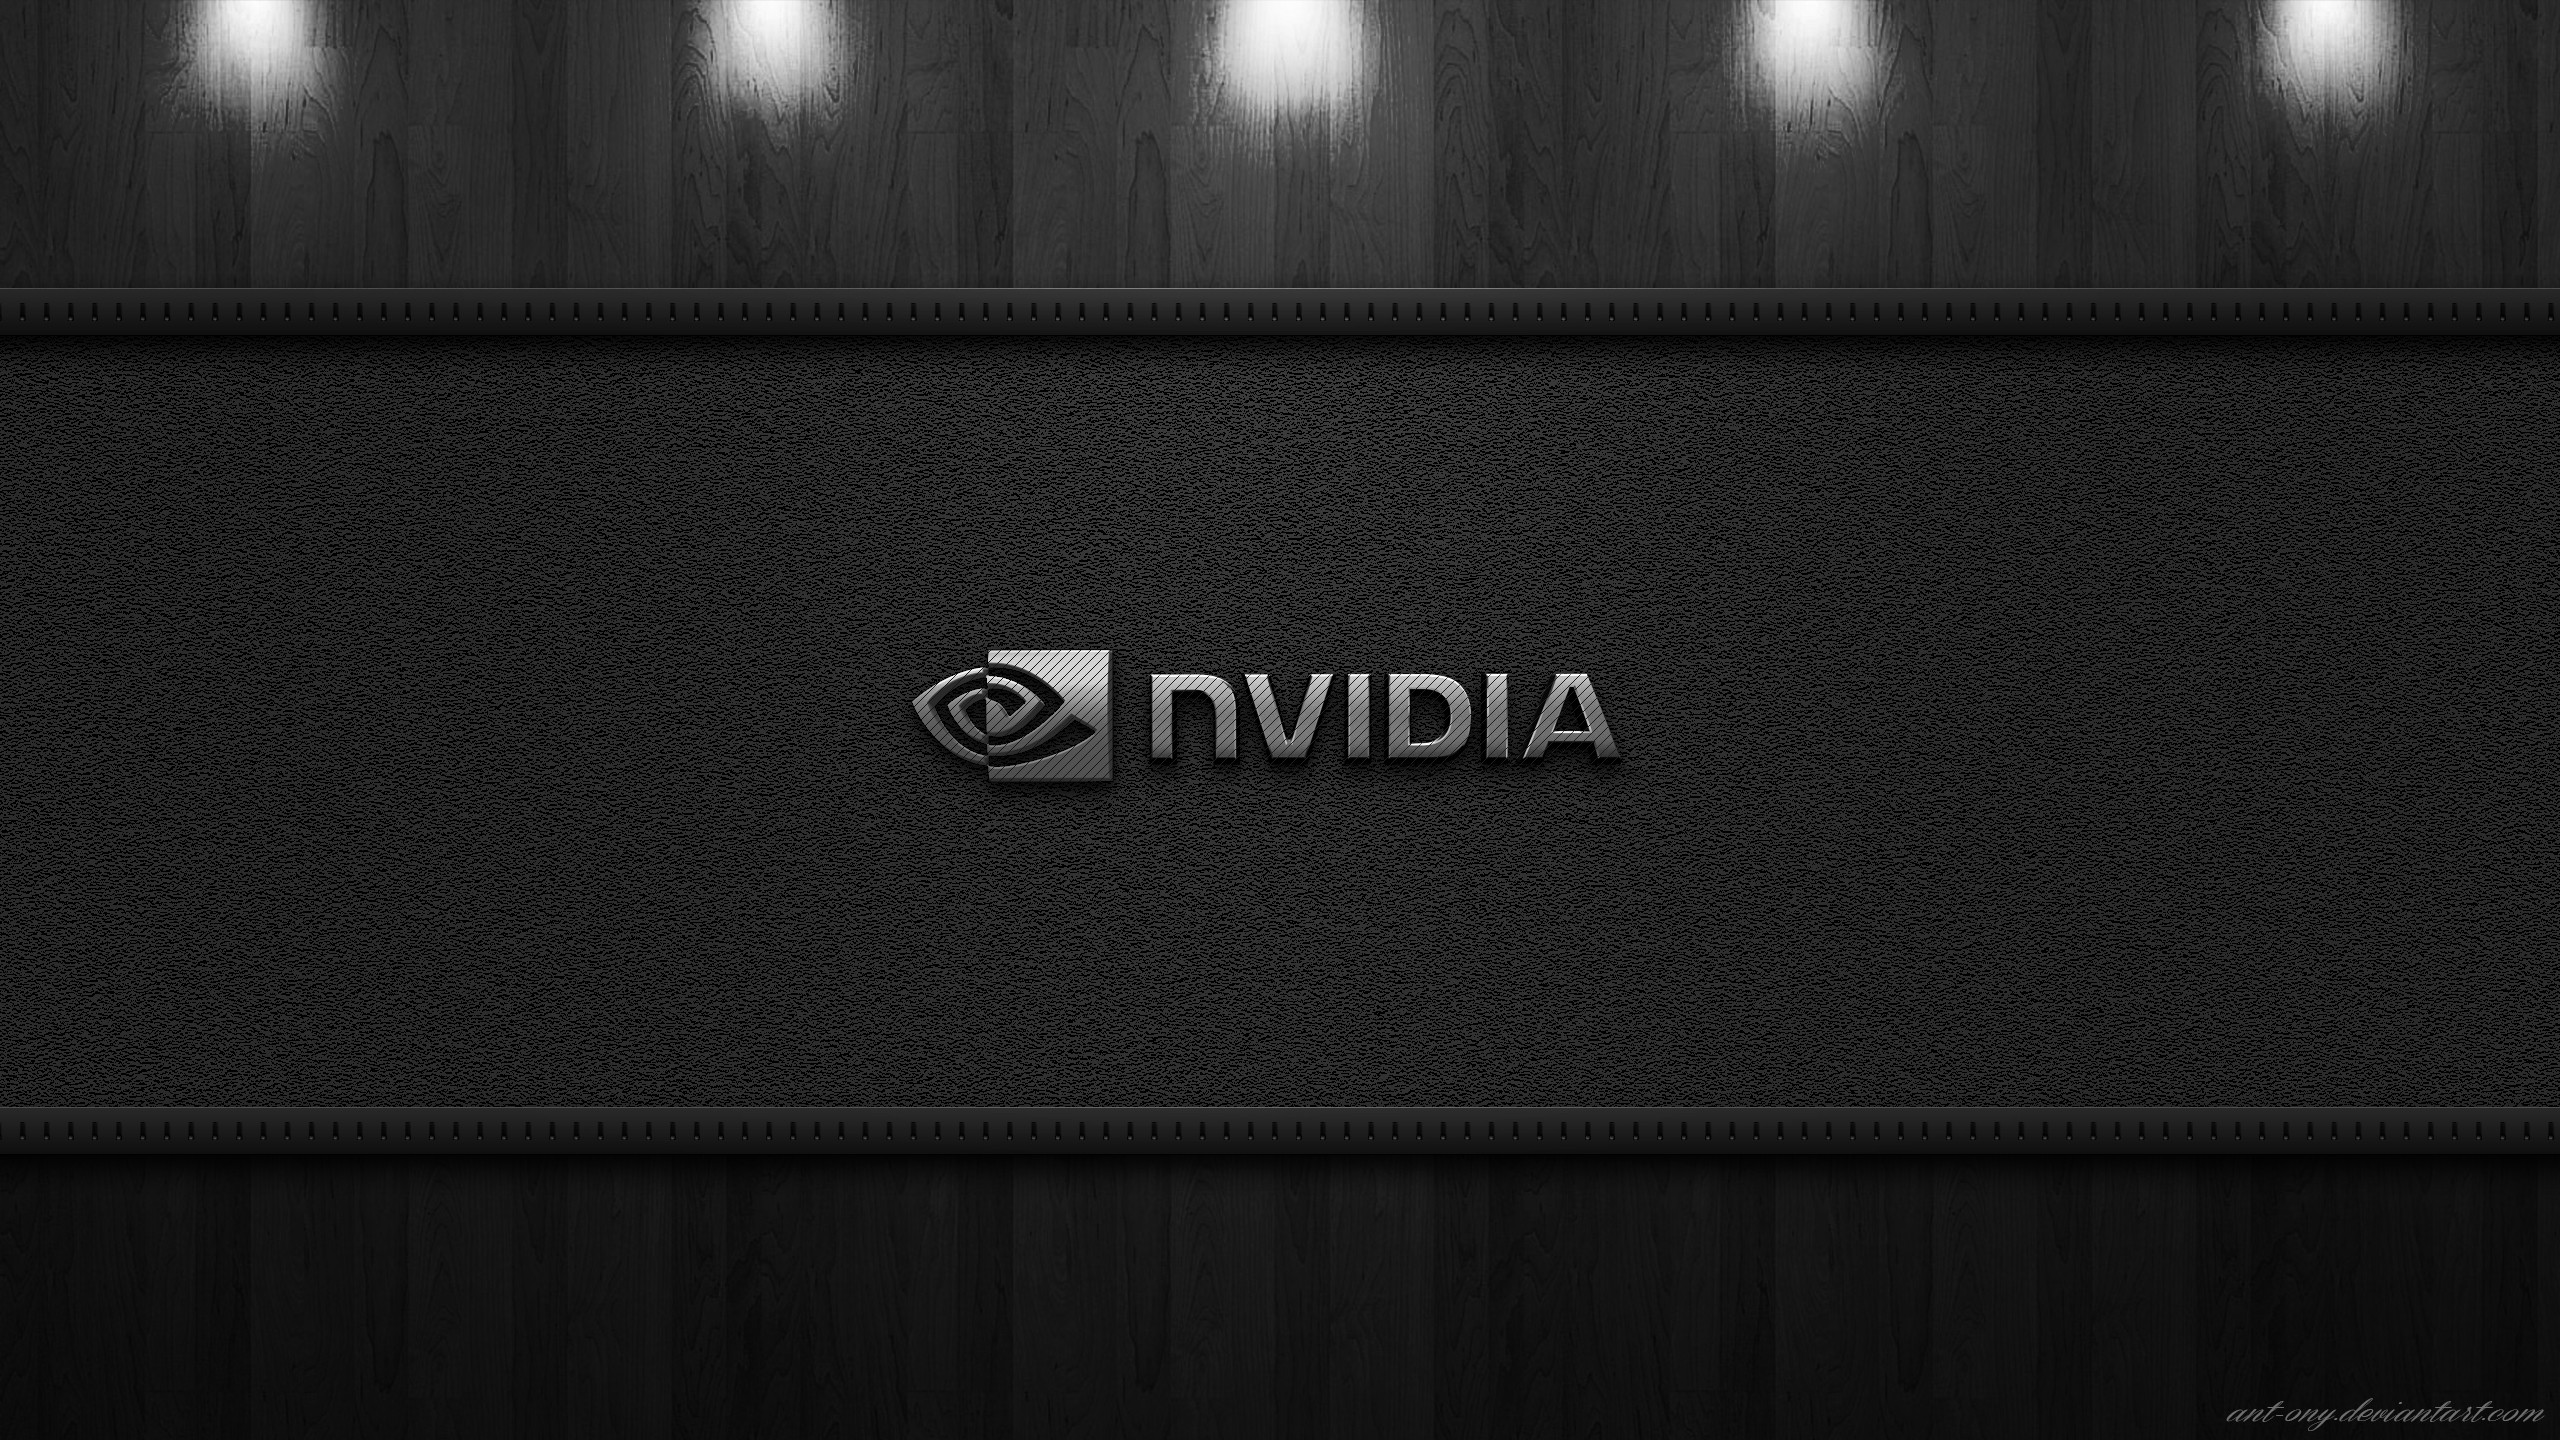 General 2560x1440 Nvidia monochrome texture logo brand